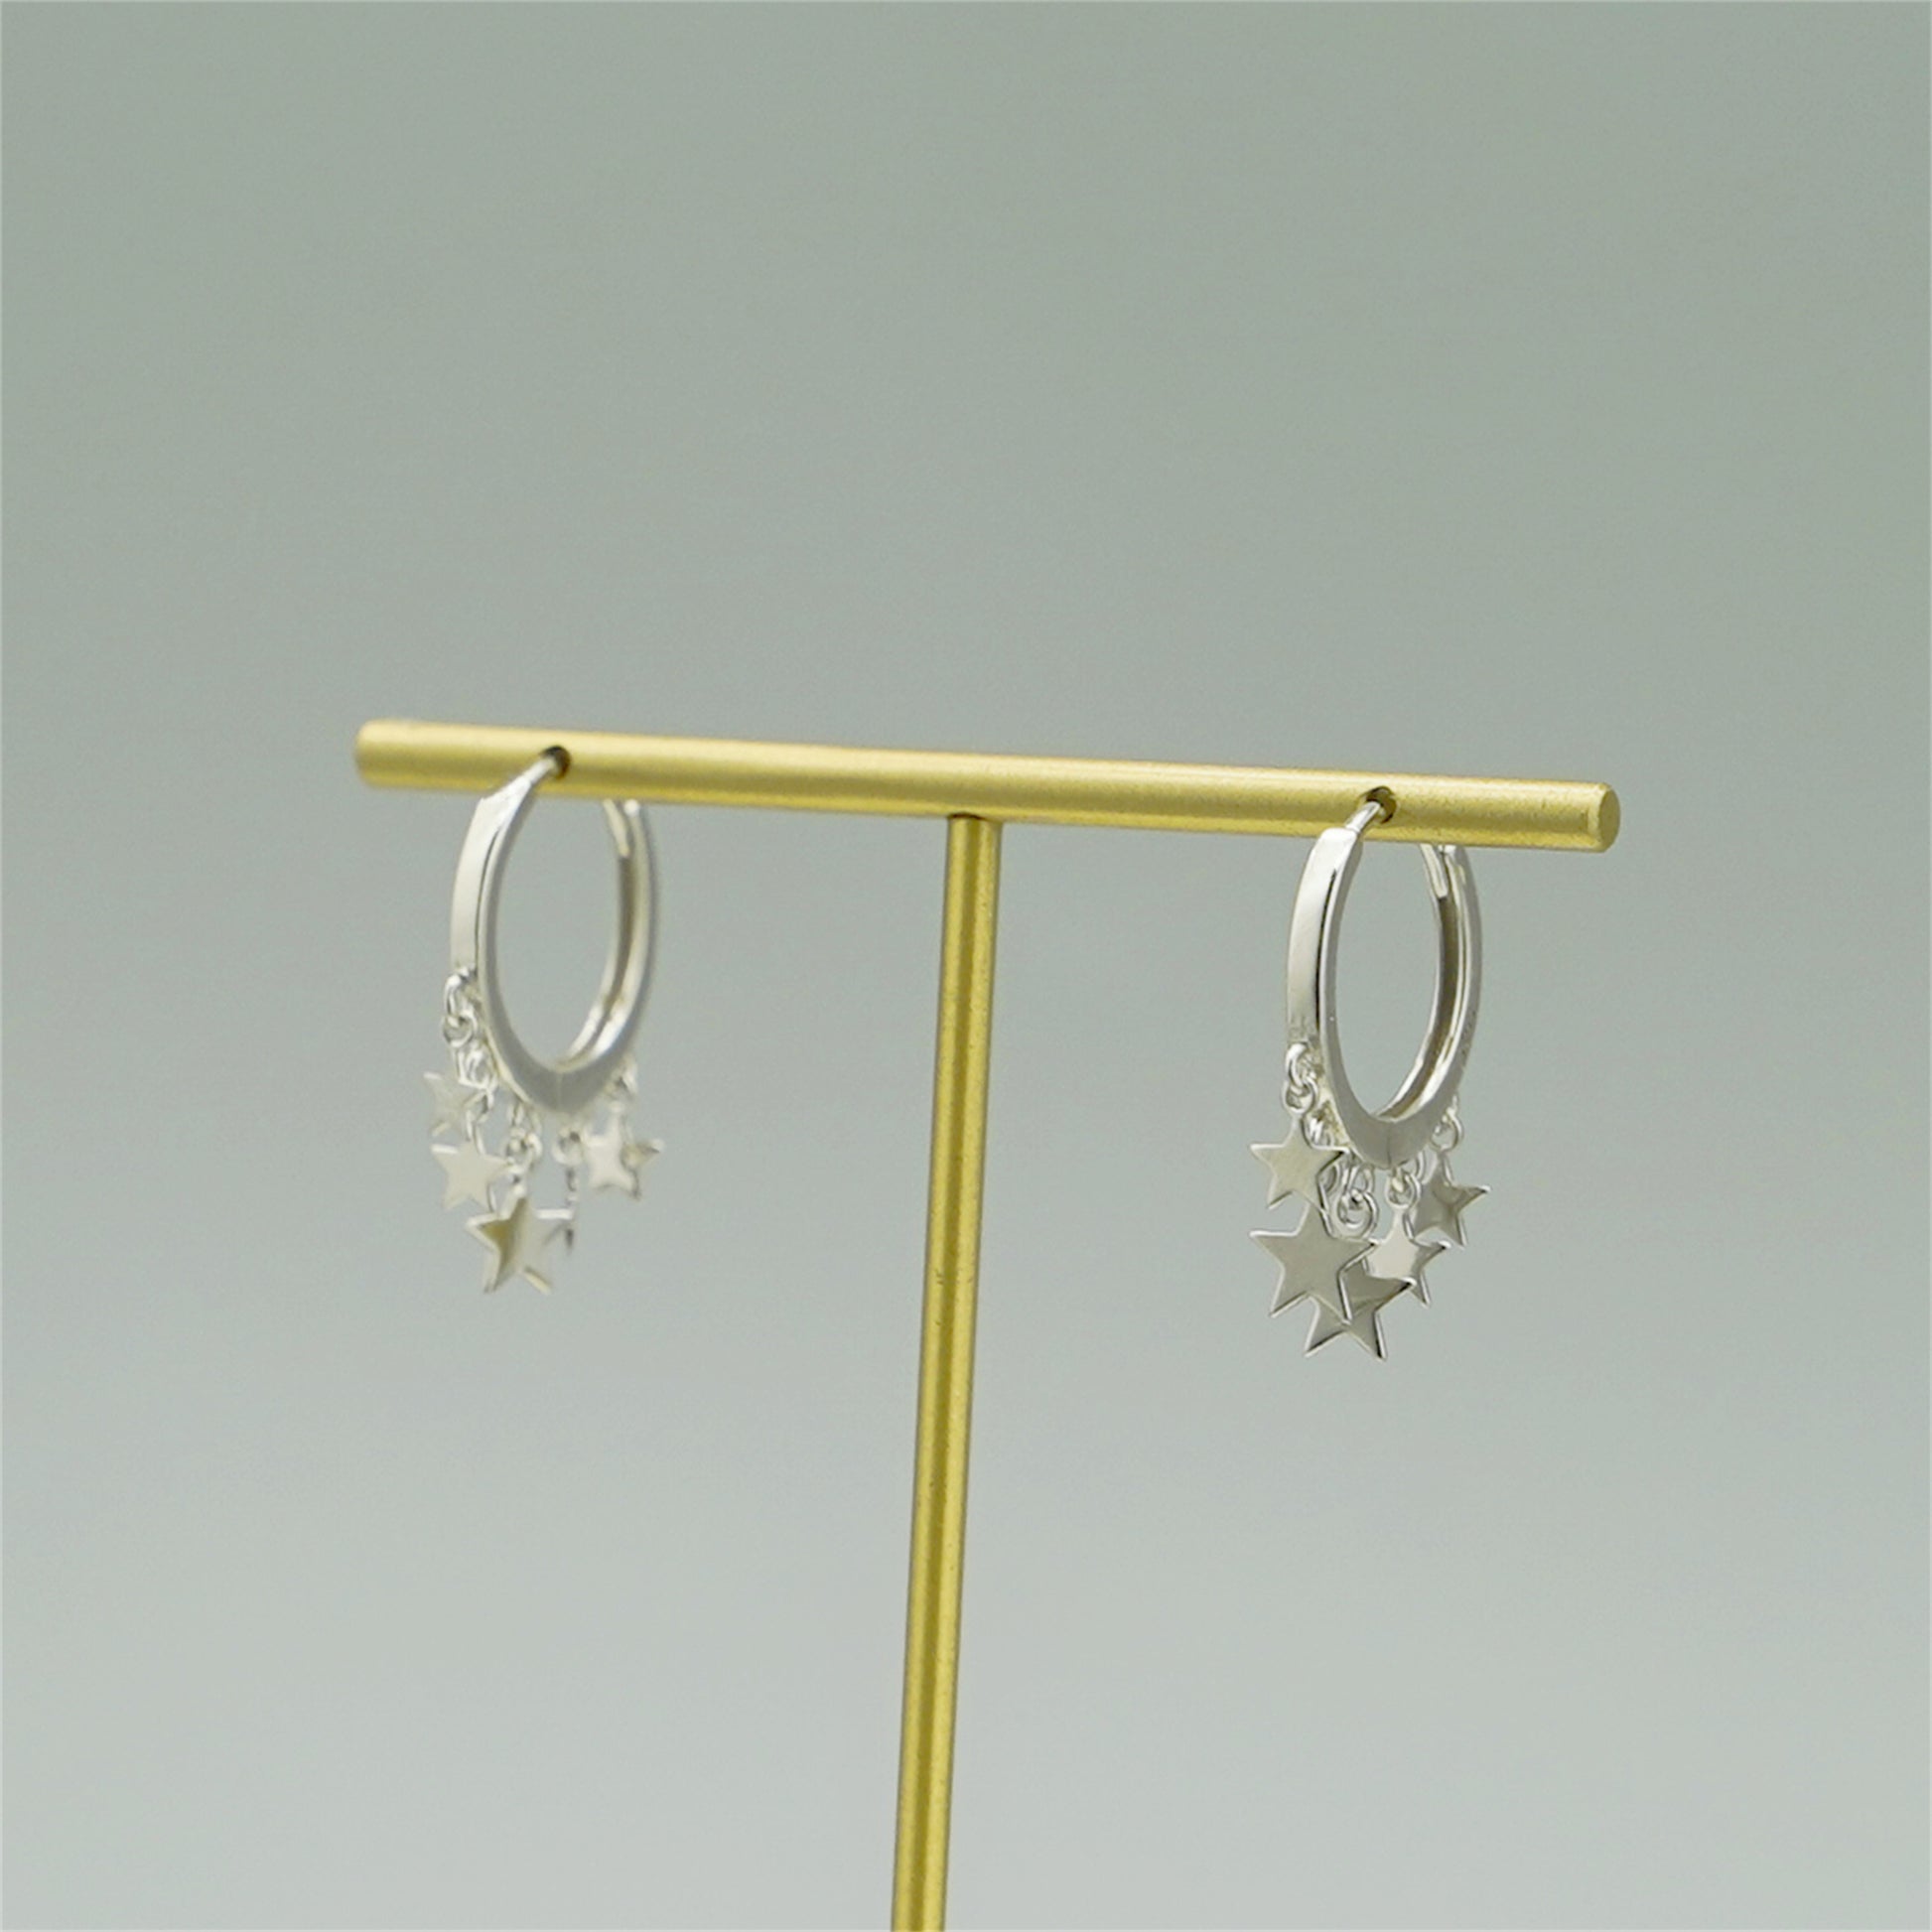 Sterling Silver Hinged Hoop Star Earrings with Charm Drops - sugarkittenlondon